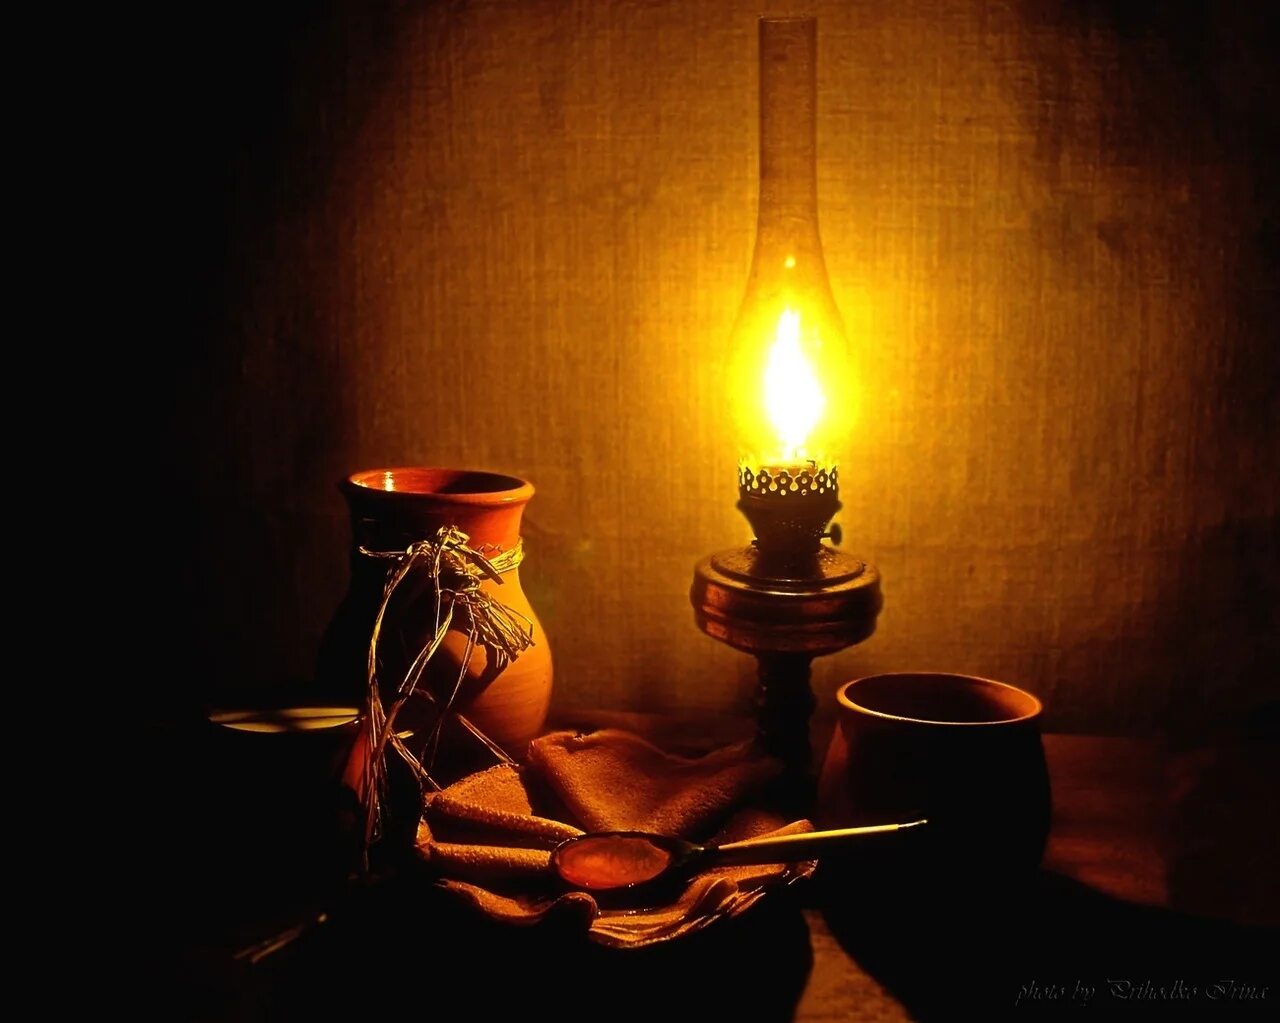 Лучина 19 век. Лампада керосинка. Керосиновая лампа 19 века. Лучина 19 век керосиновая лампа.